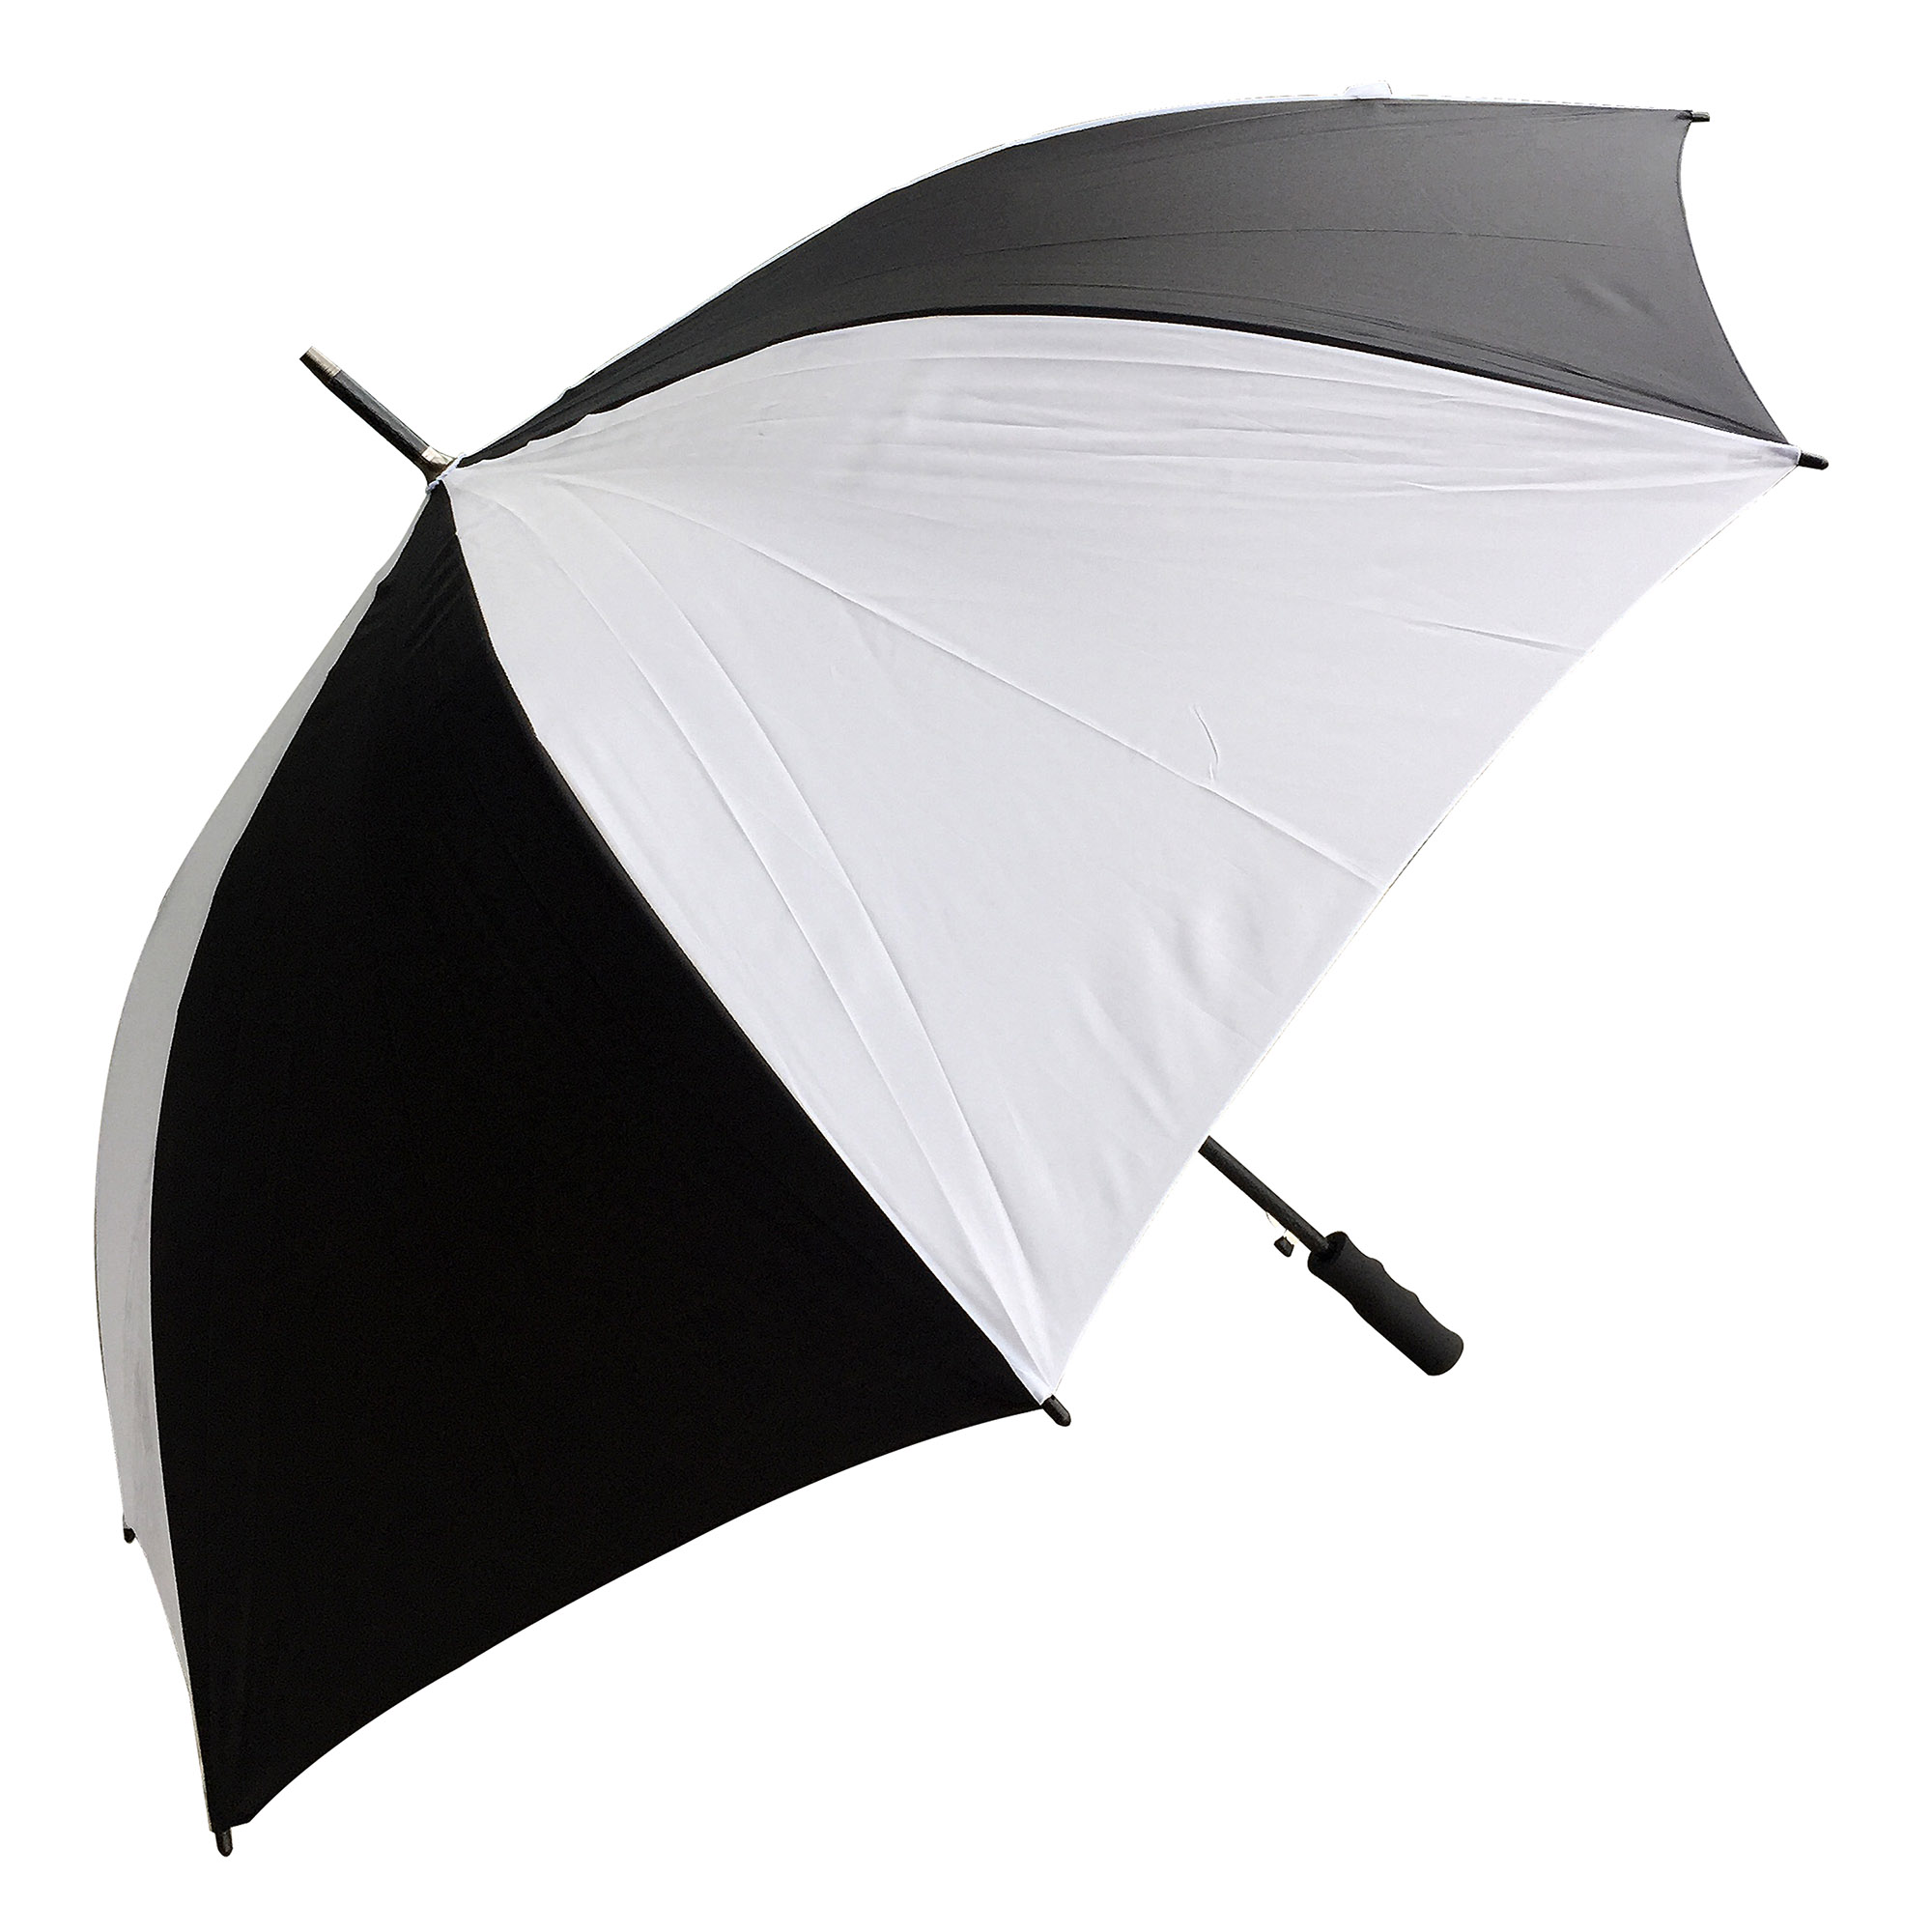 Bulk Promotional Black And White Sands Umbrella Online In Perth Australia